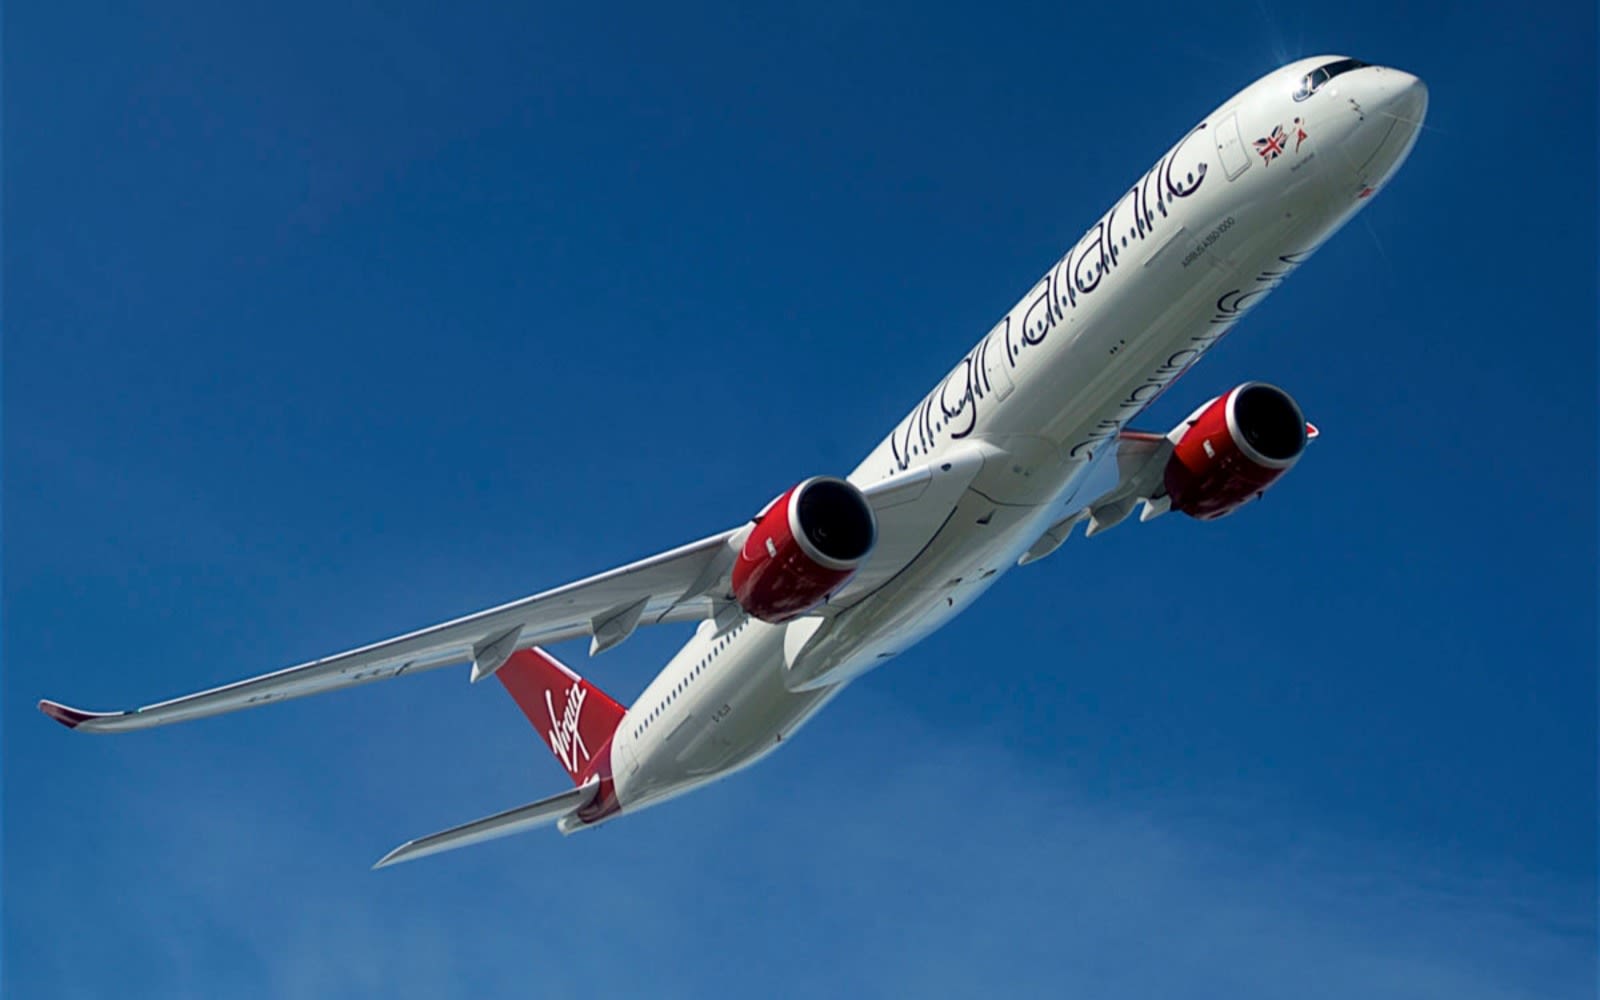 Virgin Atlantic's Airbus A350-1000